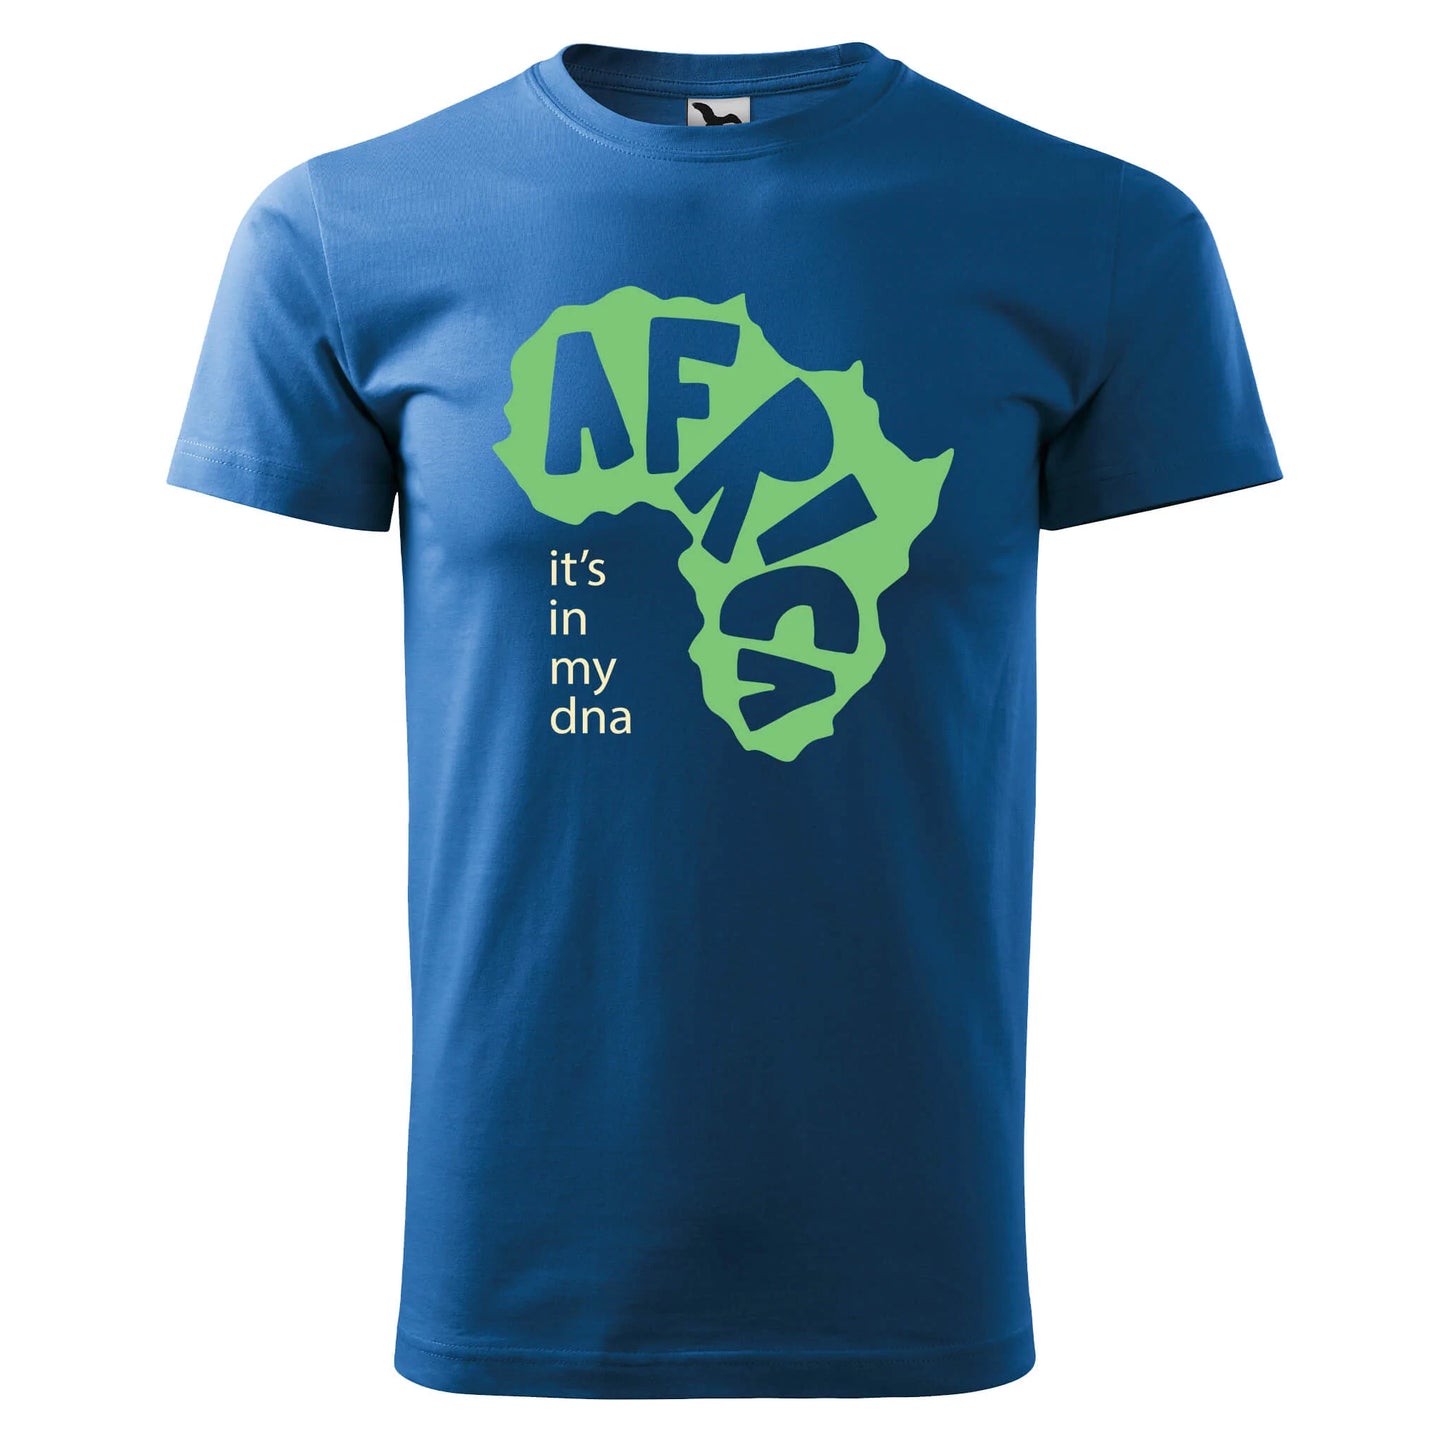 Africa in my dna t-shirt - rvdesignprint